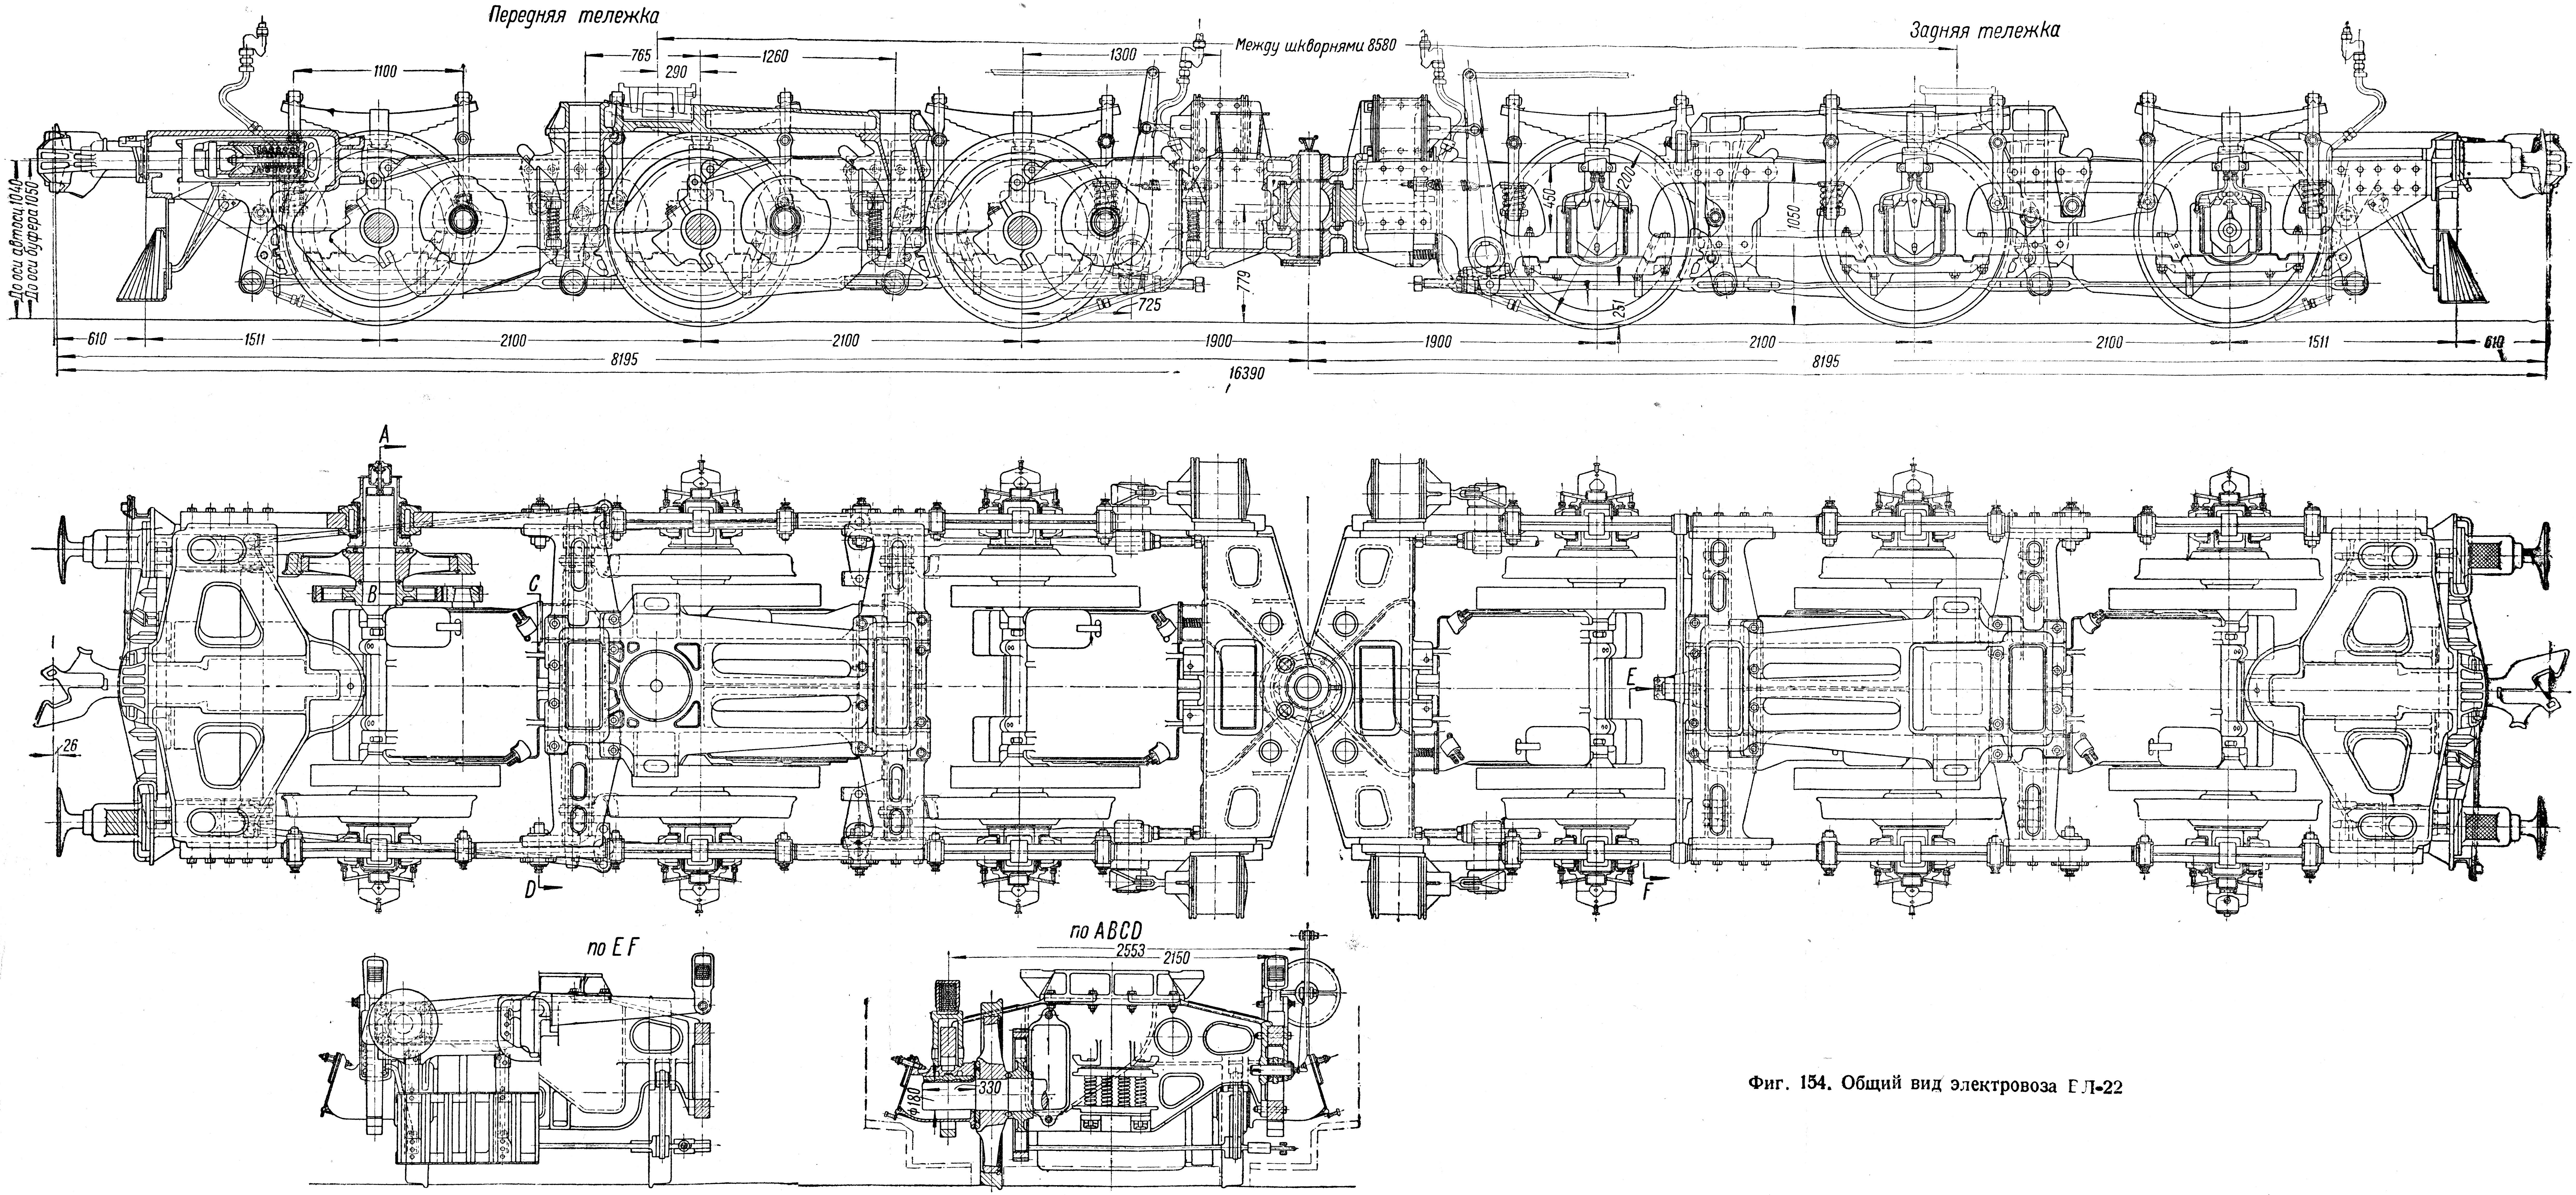 VL22 blueprint